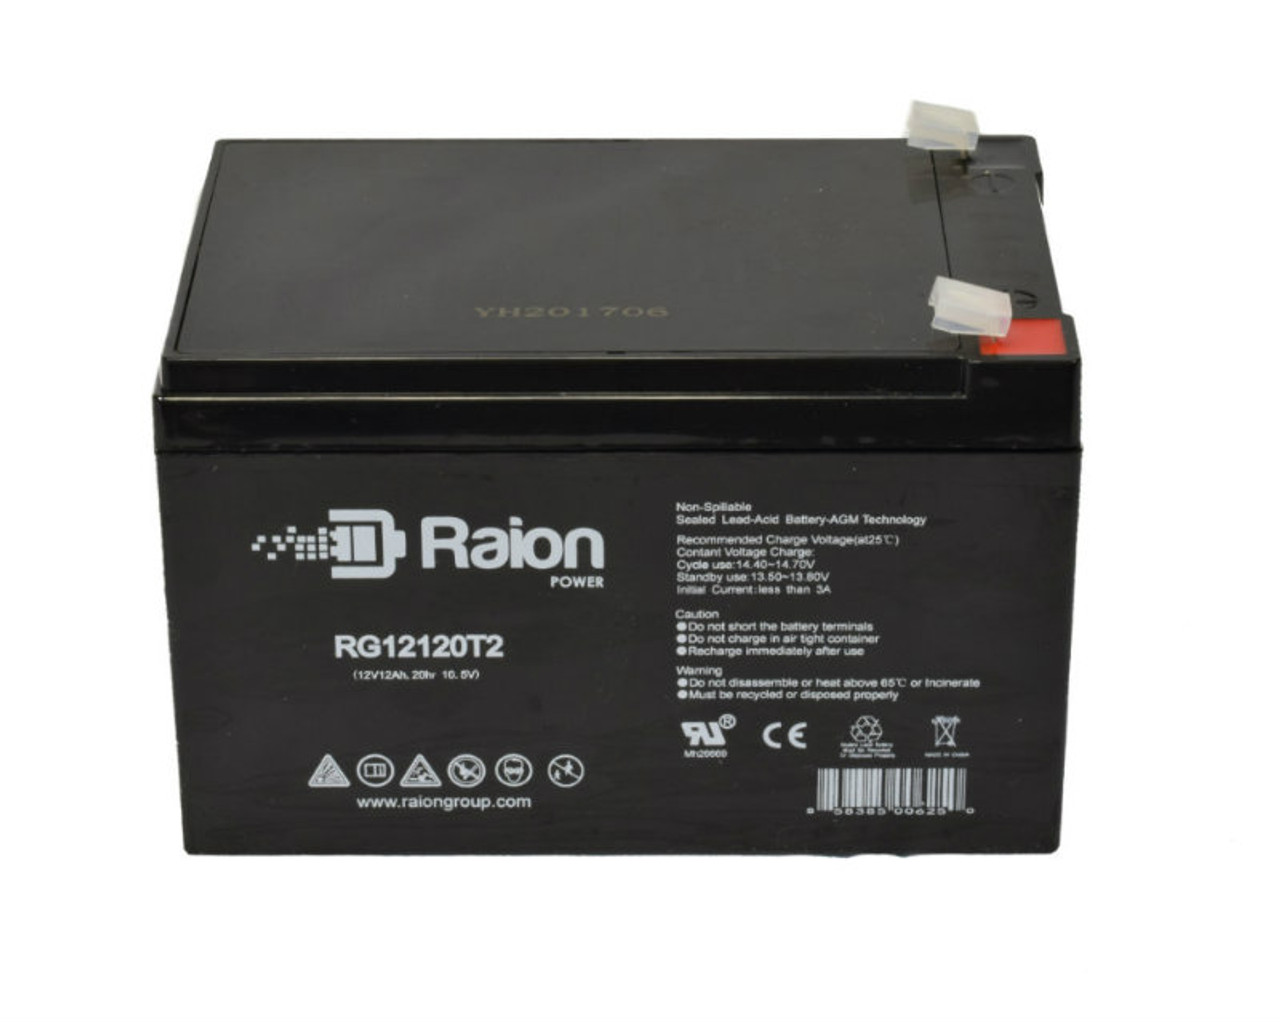 Raion Power RG12120T2 SLA Battery for Green Cell AGM07